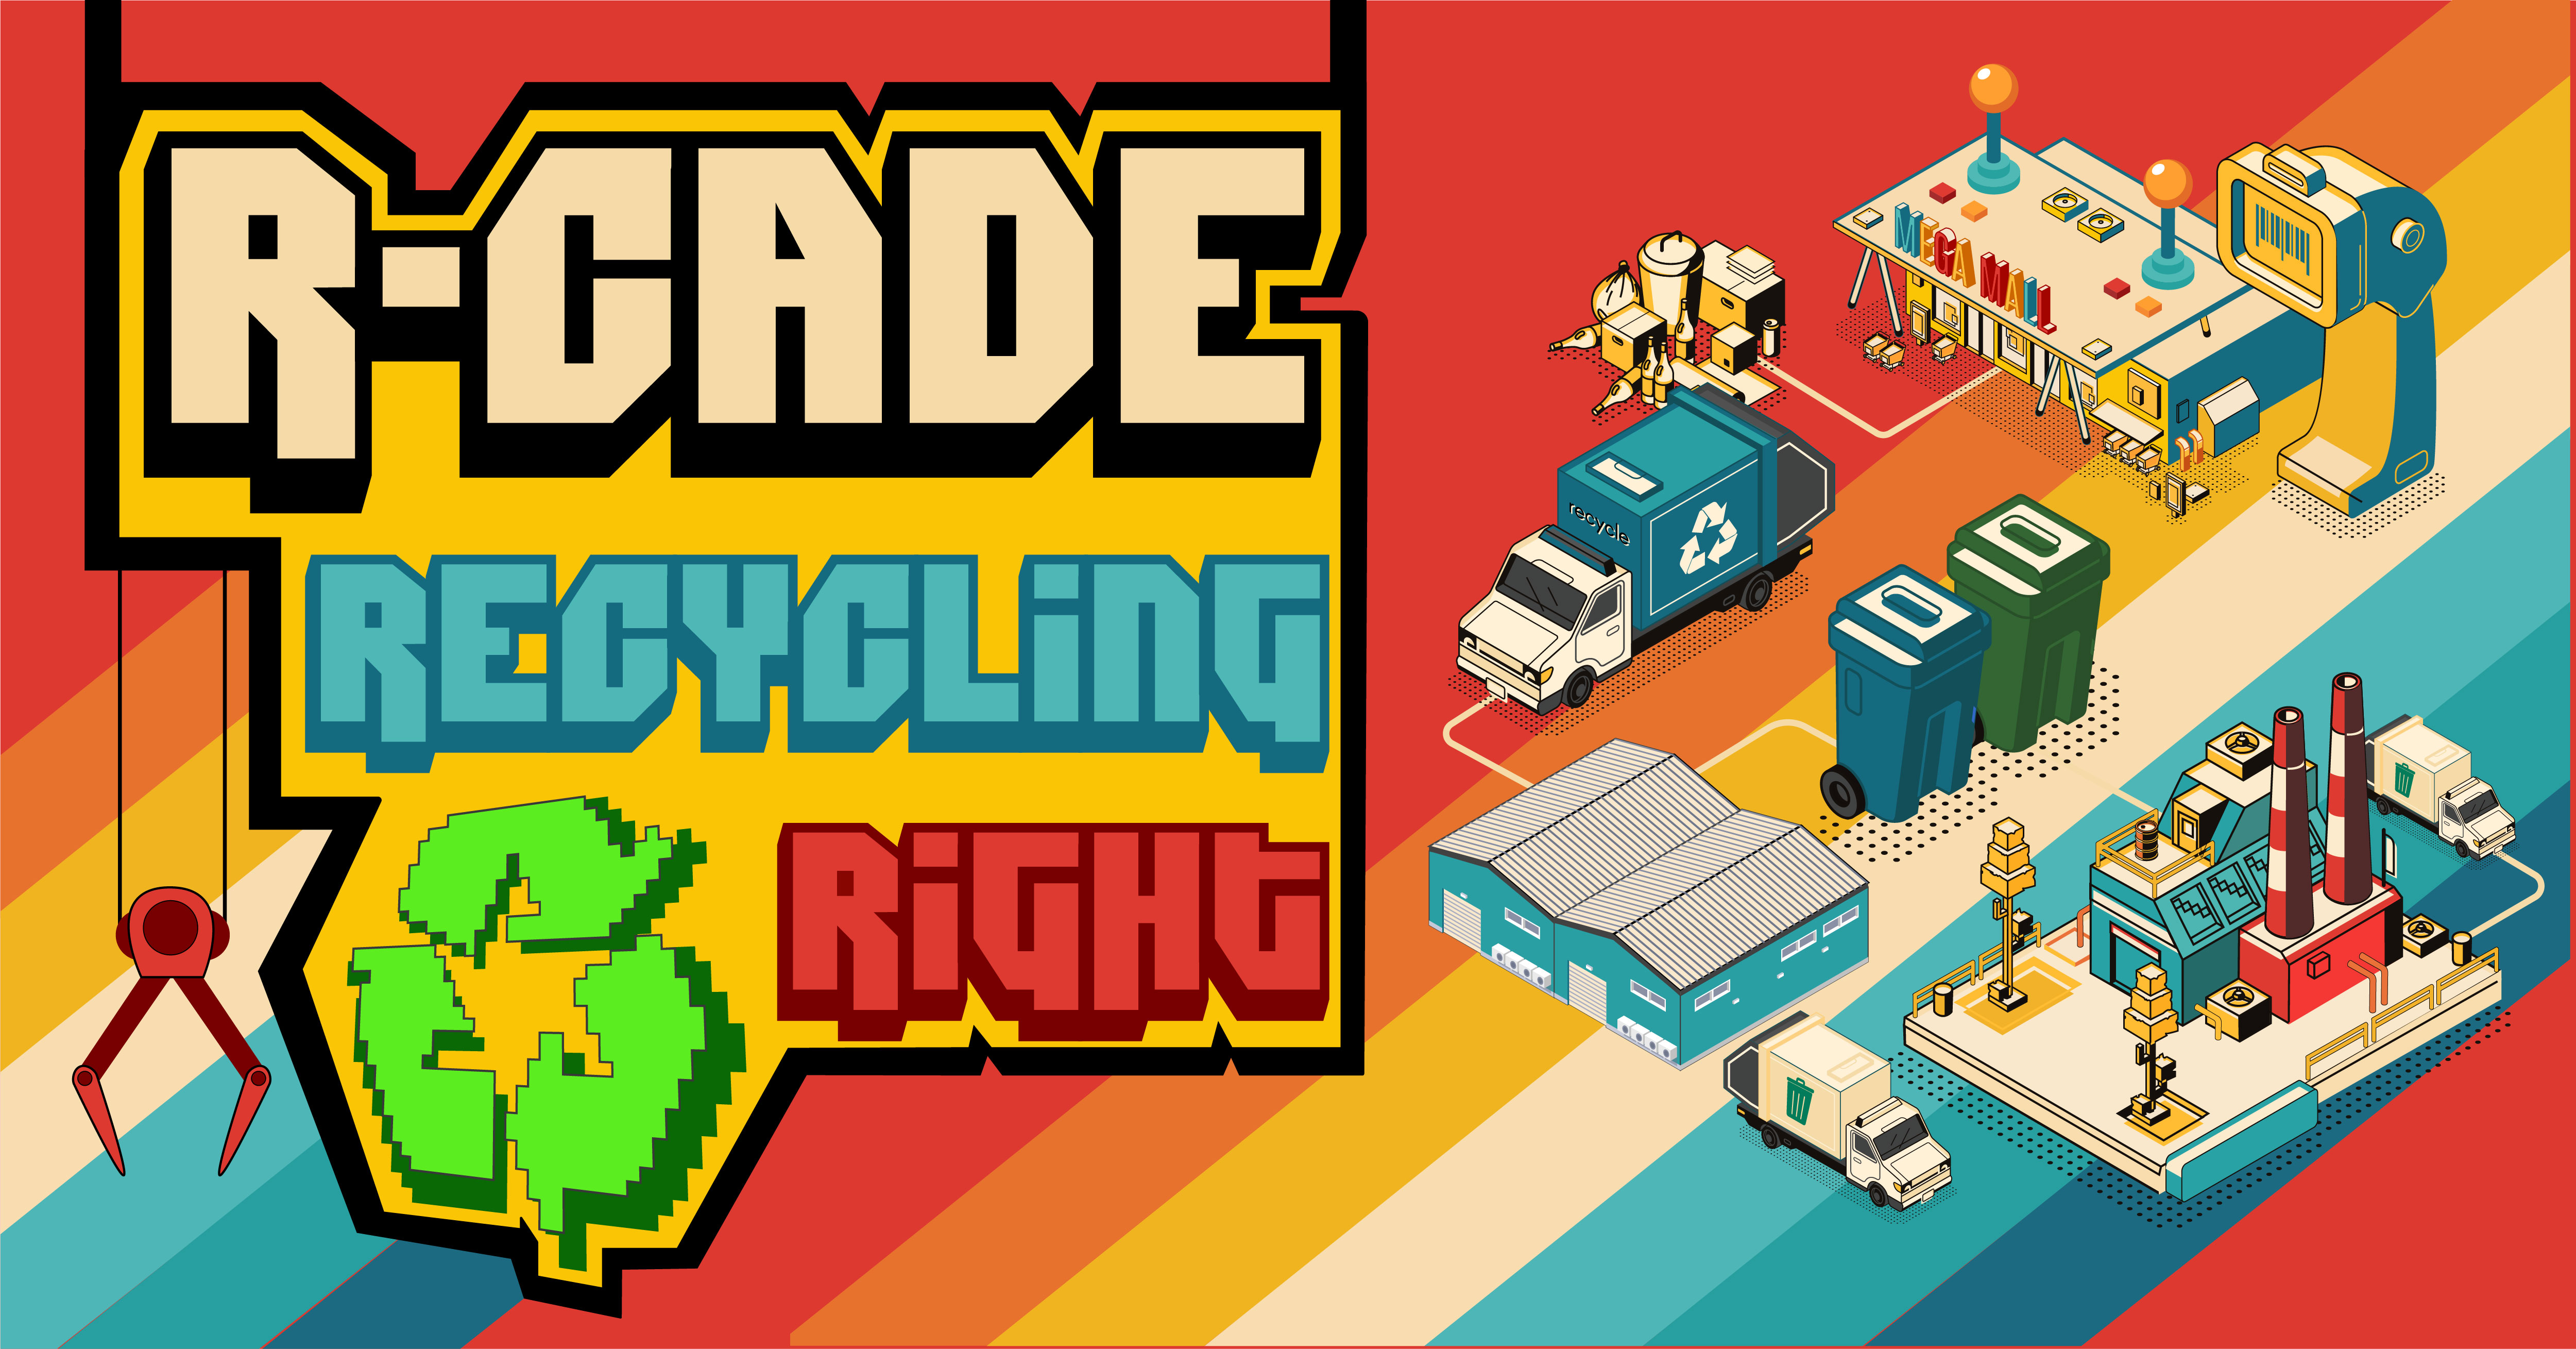 R-CADE: Recycling Right, Singapore, South East, Singapore